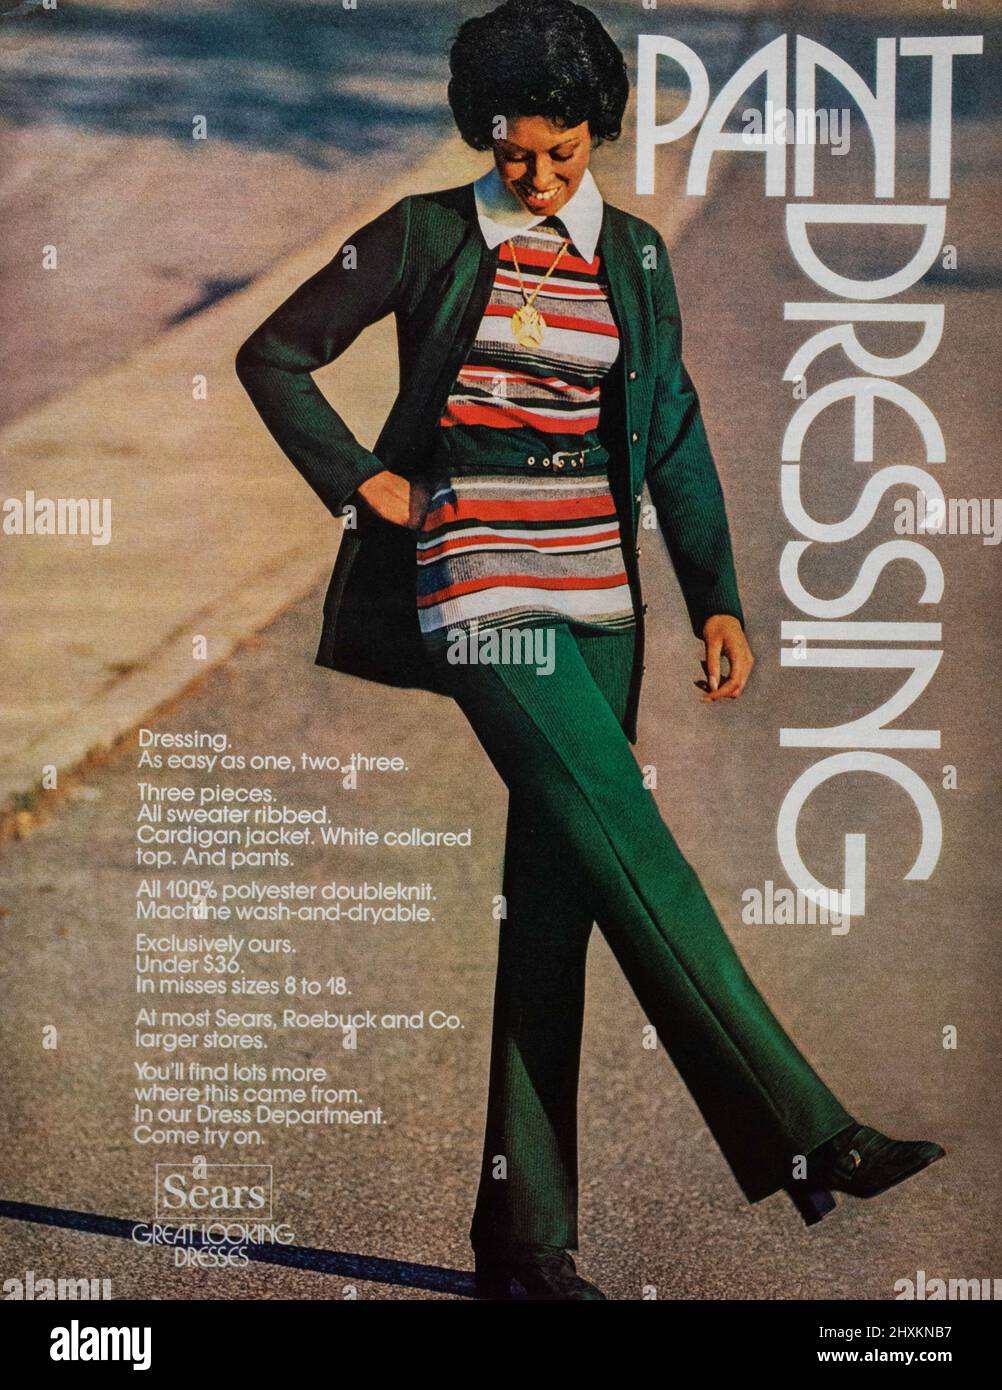 Vintage September 1973 'Ladies' Home Journal' Magazine Advert, USA Stock Photo